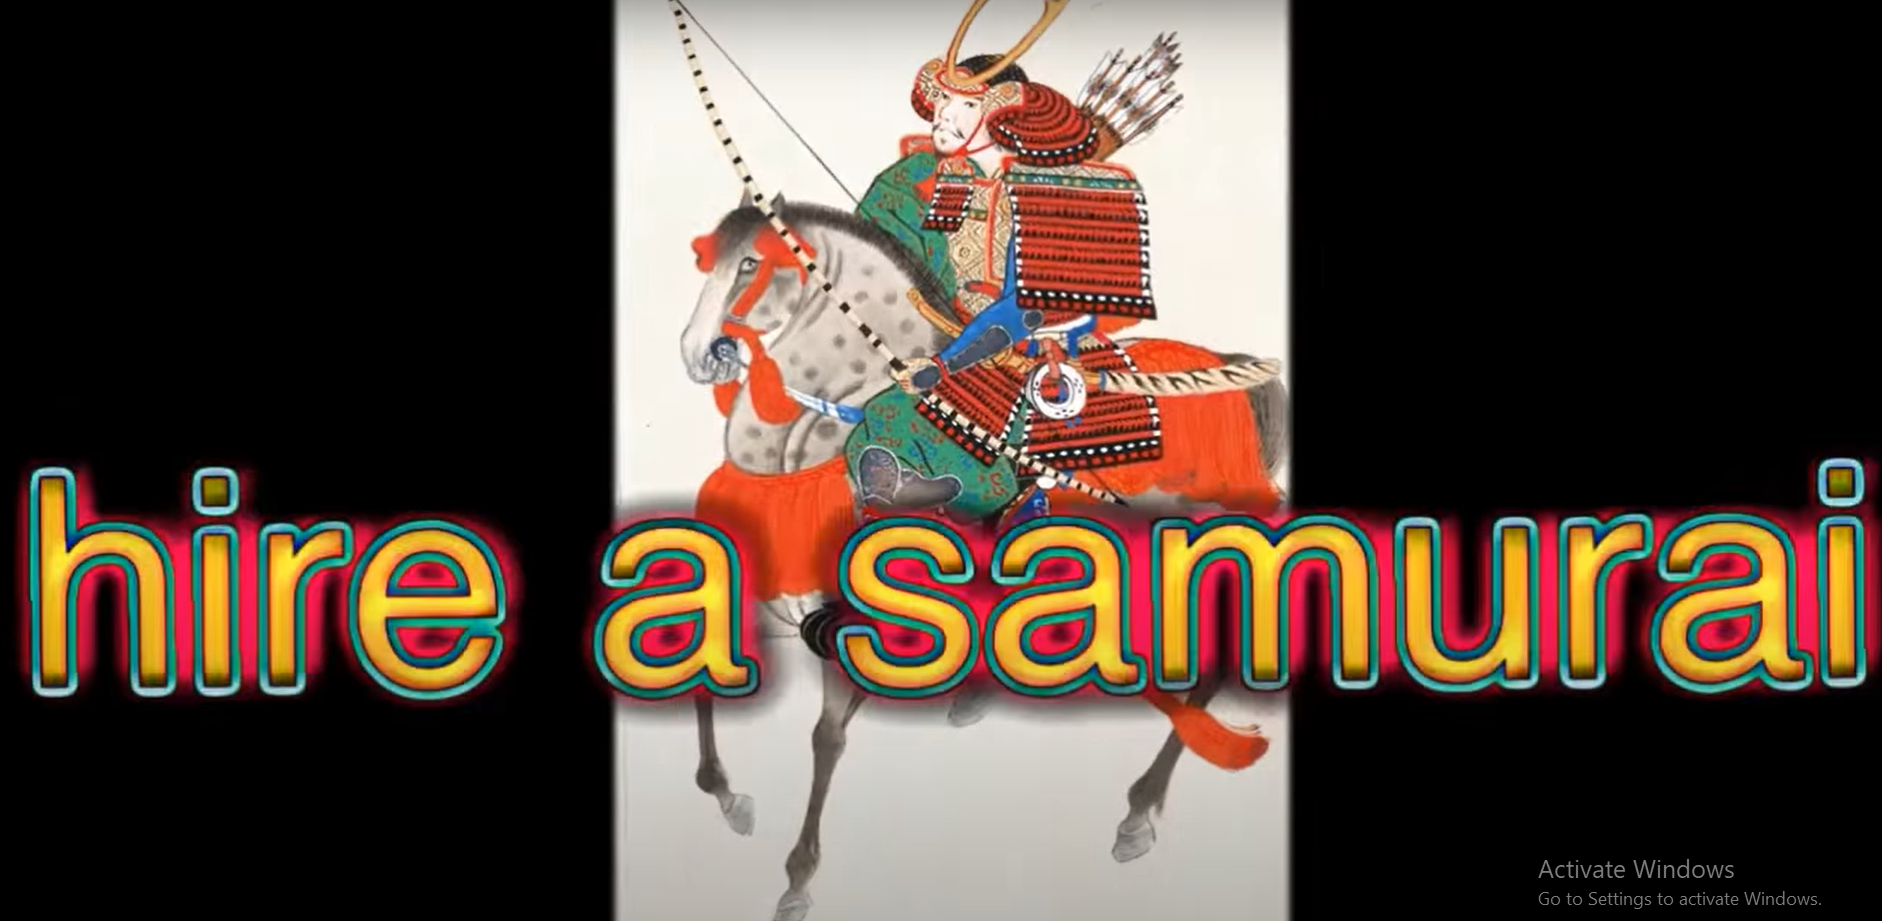 hire a samurai Blank Meme Template